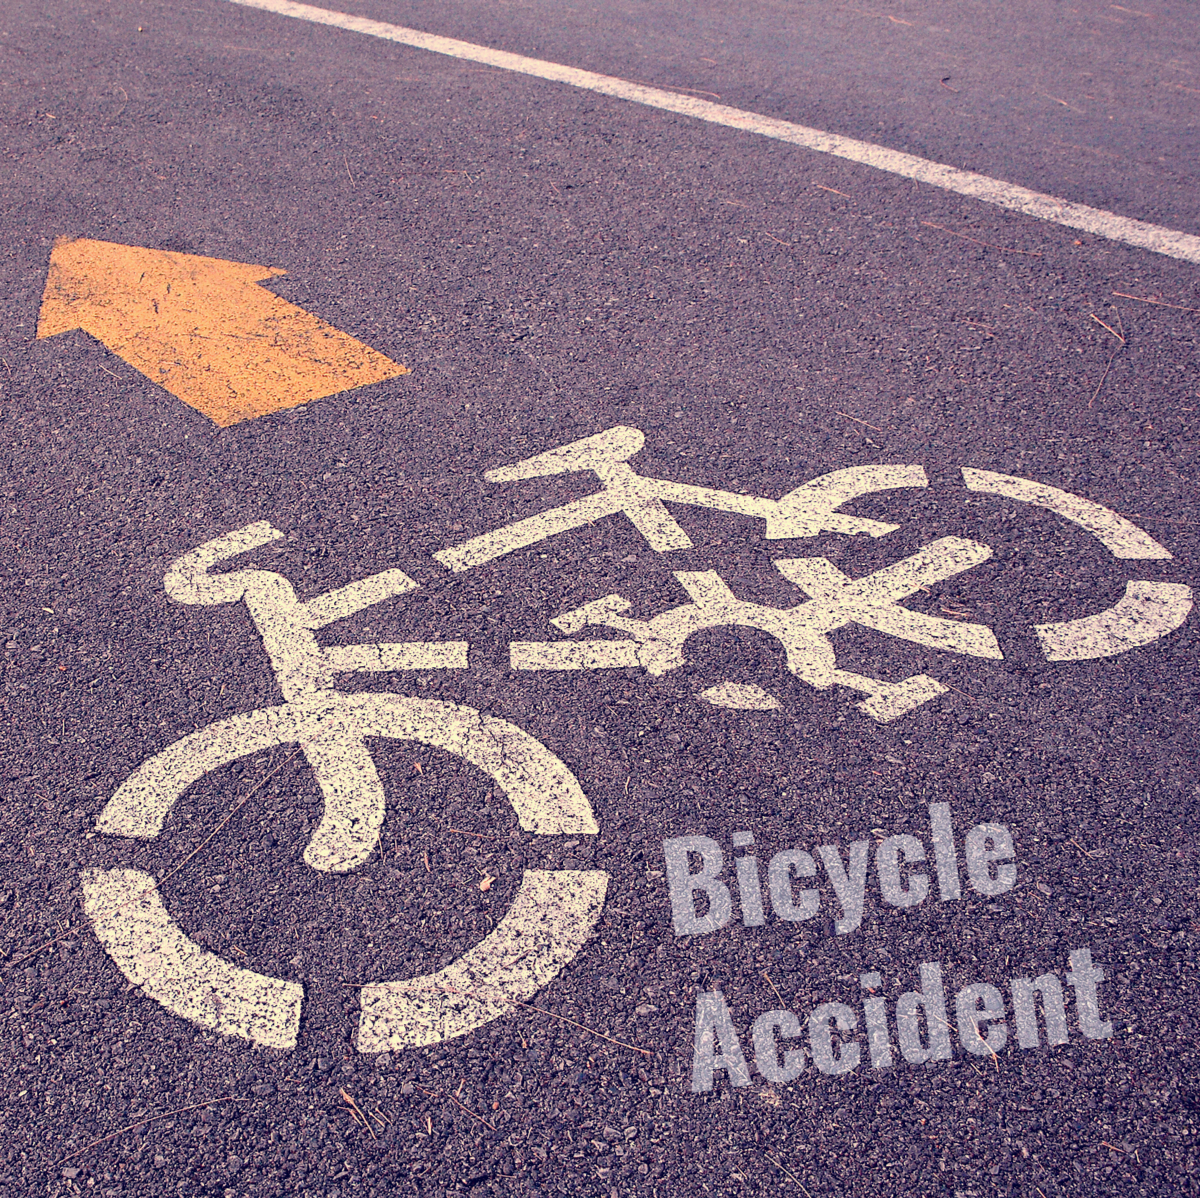 Carmichael Bicycle Accident Marconi Avenue Near Westwood Lane